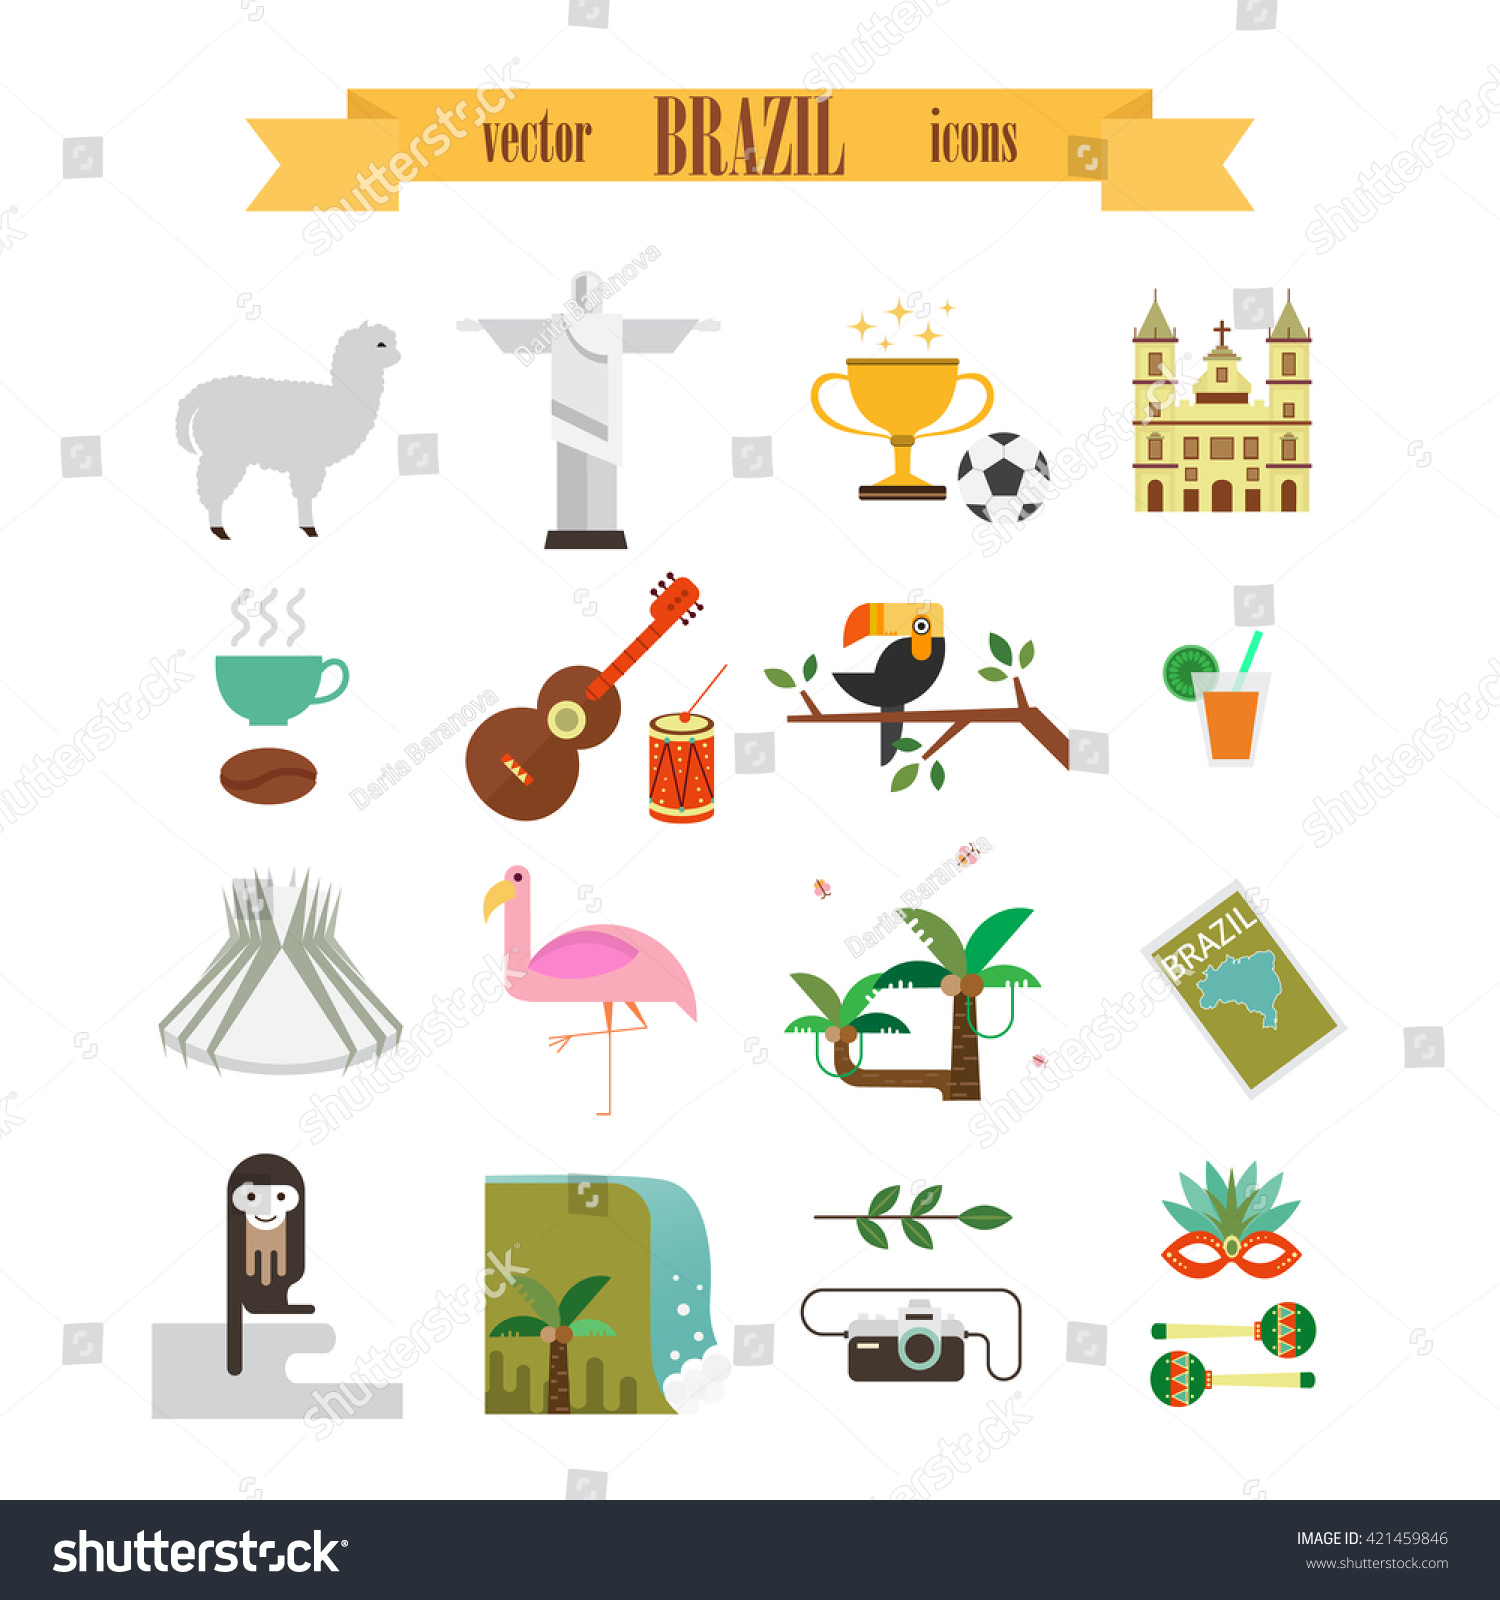 SVG of Vector Brazil icons set. svg